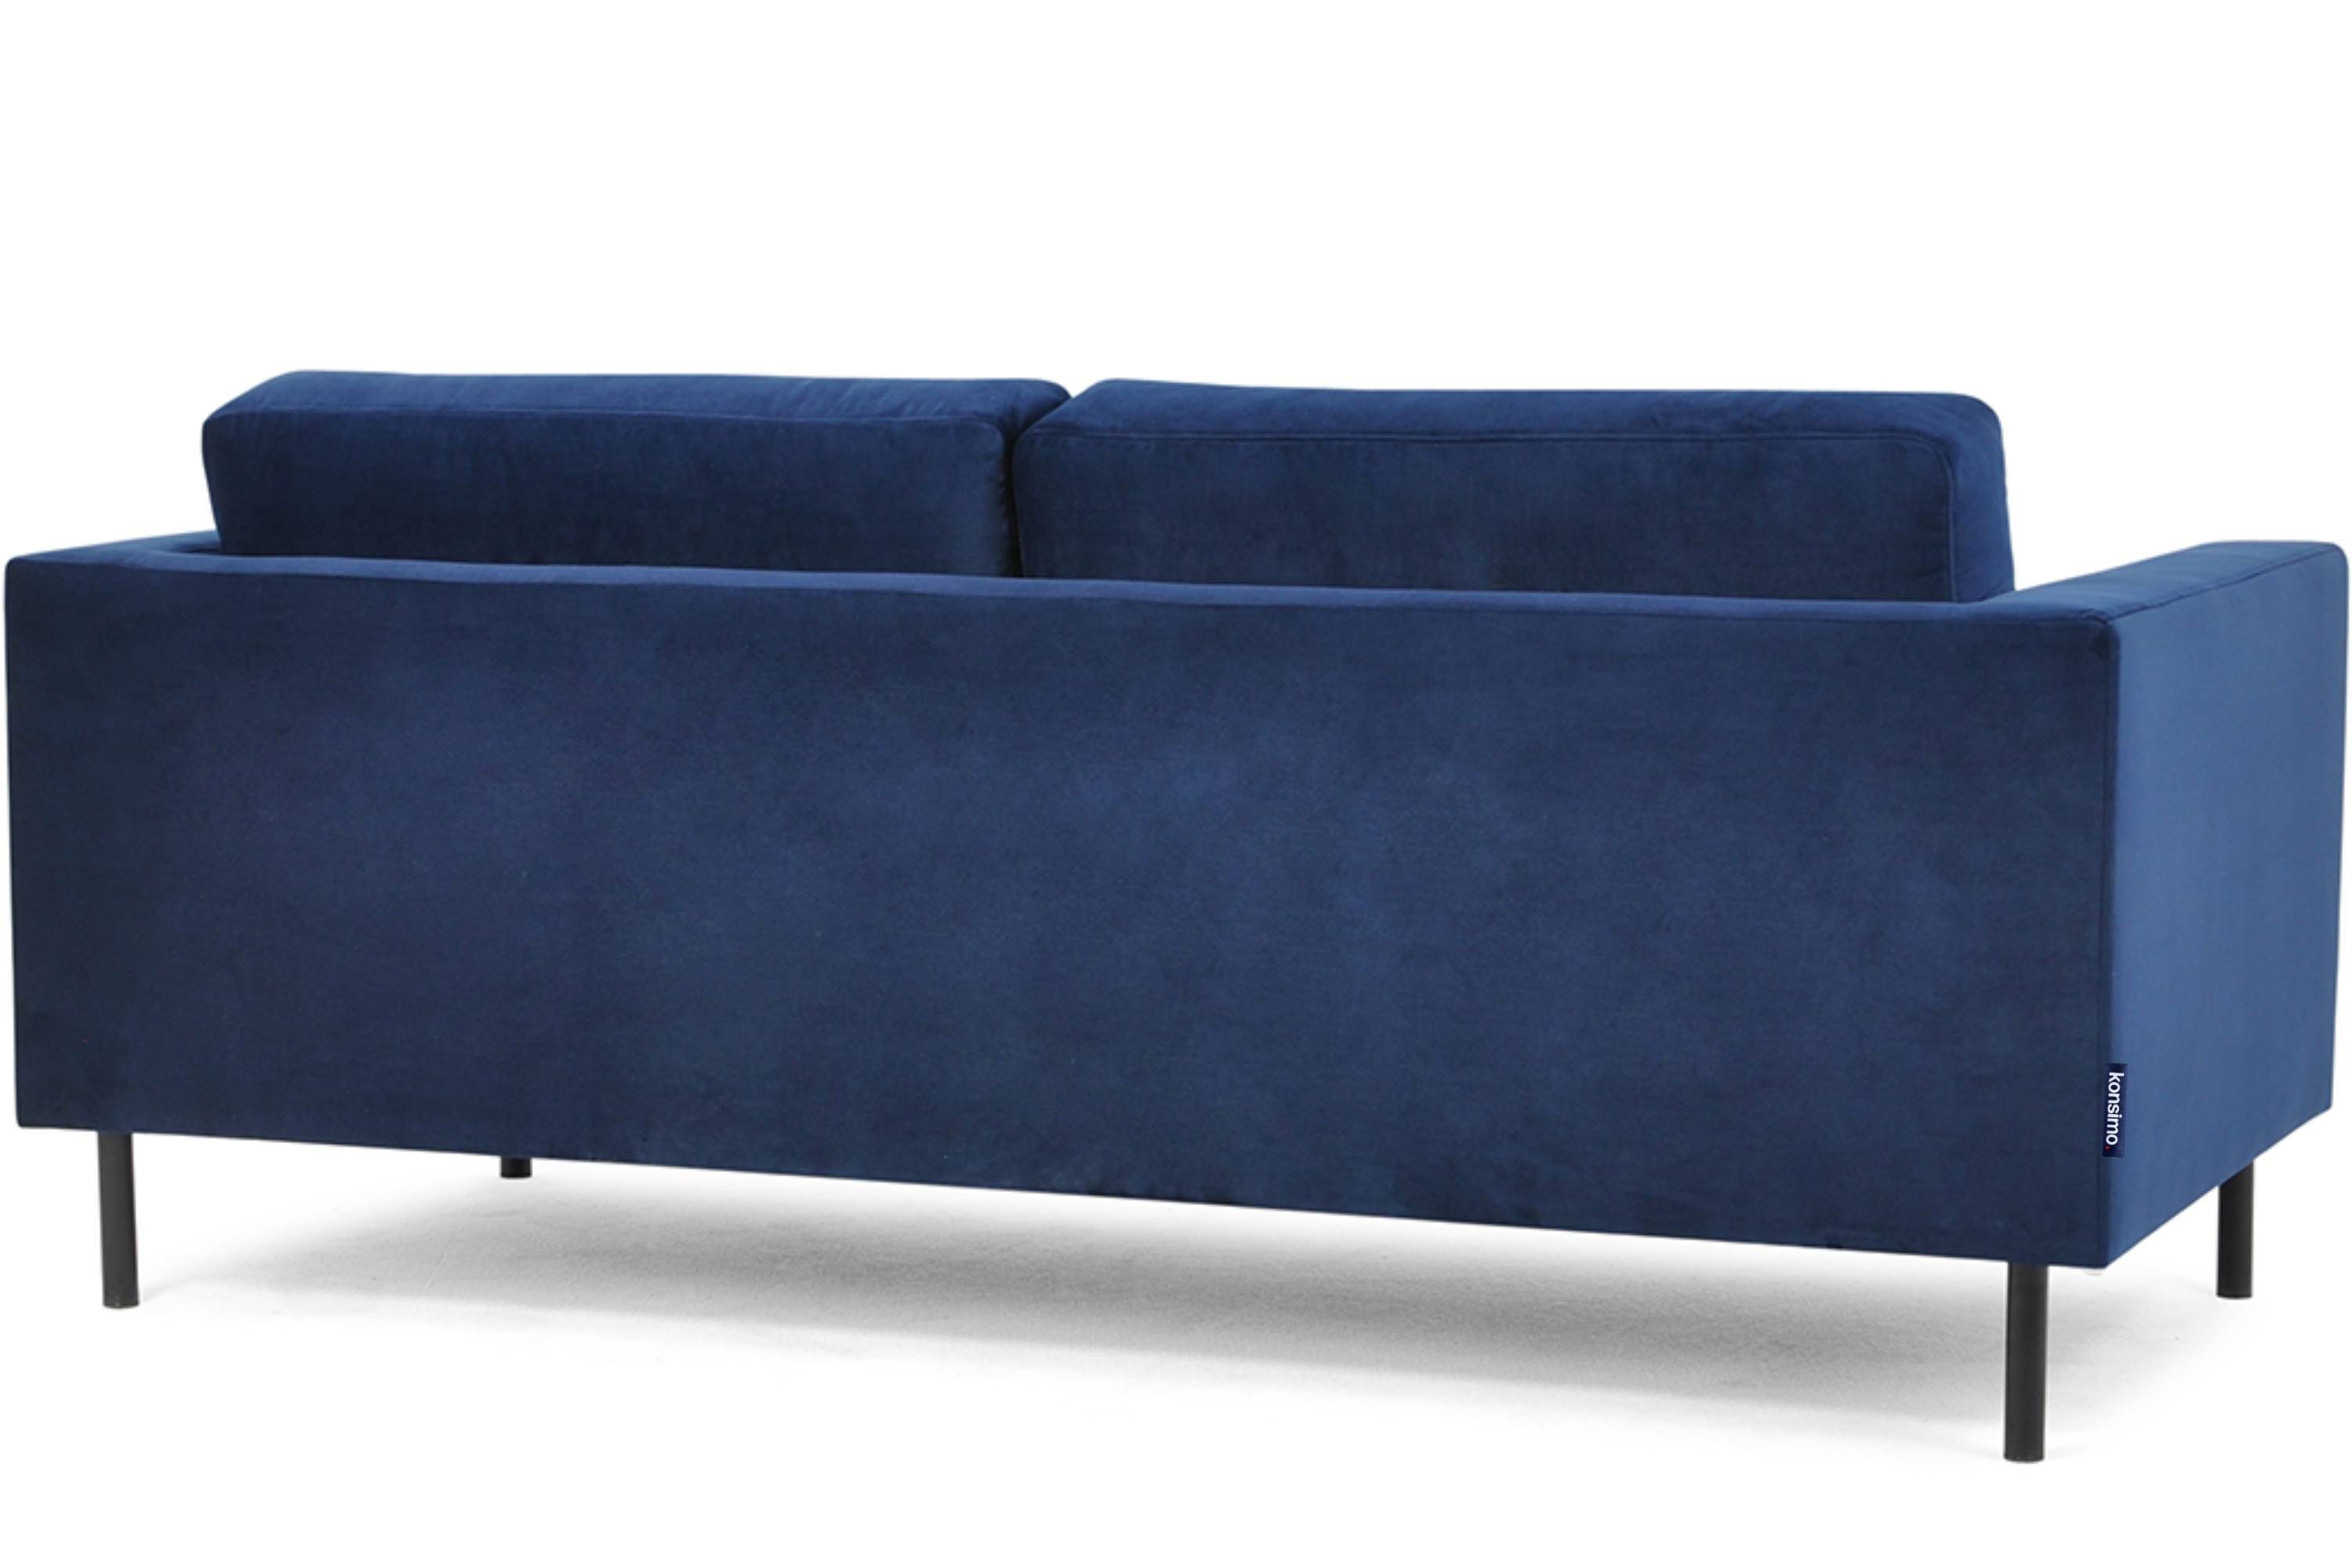 Design TOZZI marineblau universelles Konsimo marineblau | Sofa, marineblau 2,5-Sitzer | hohe Beine,